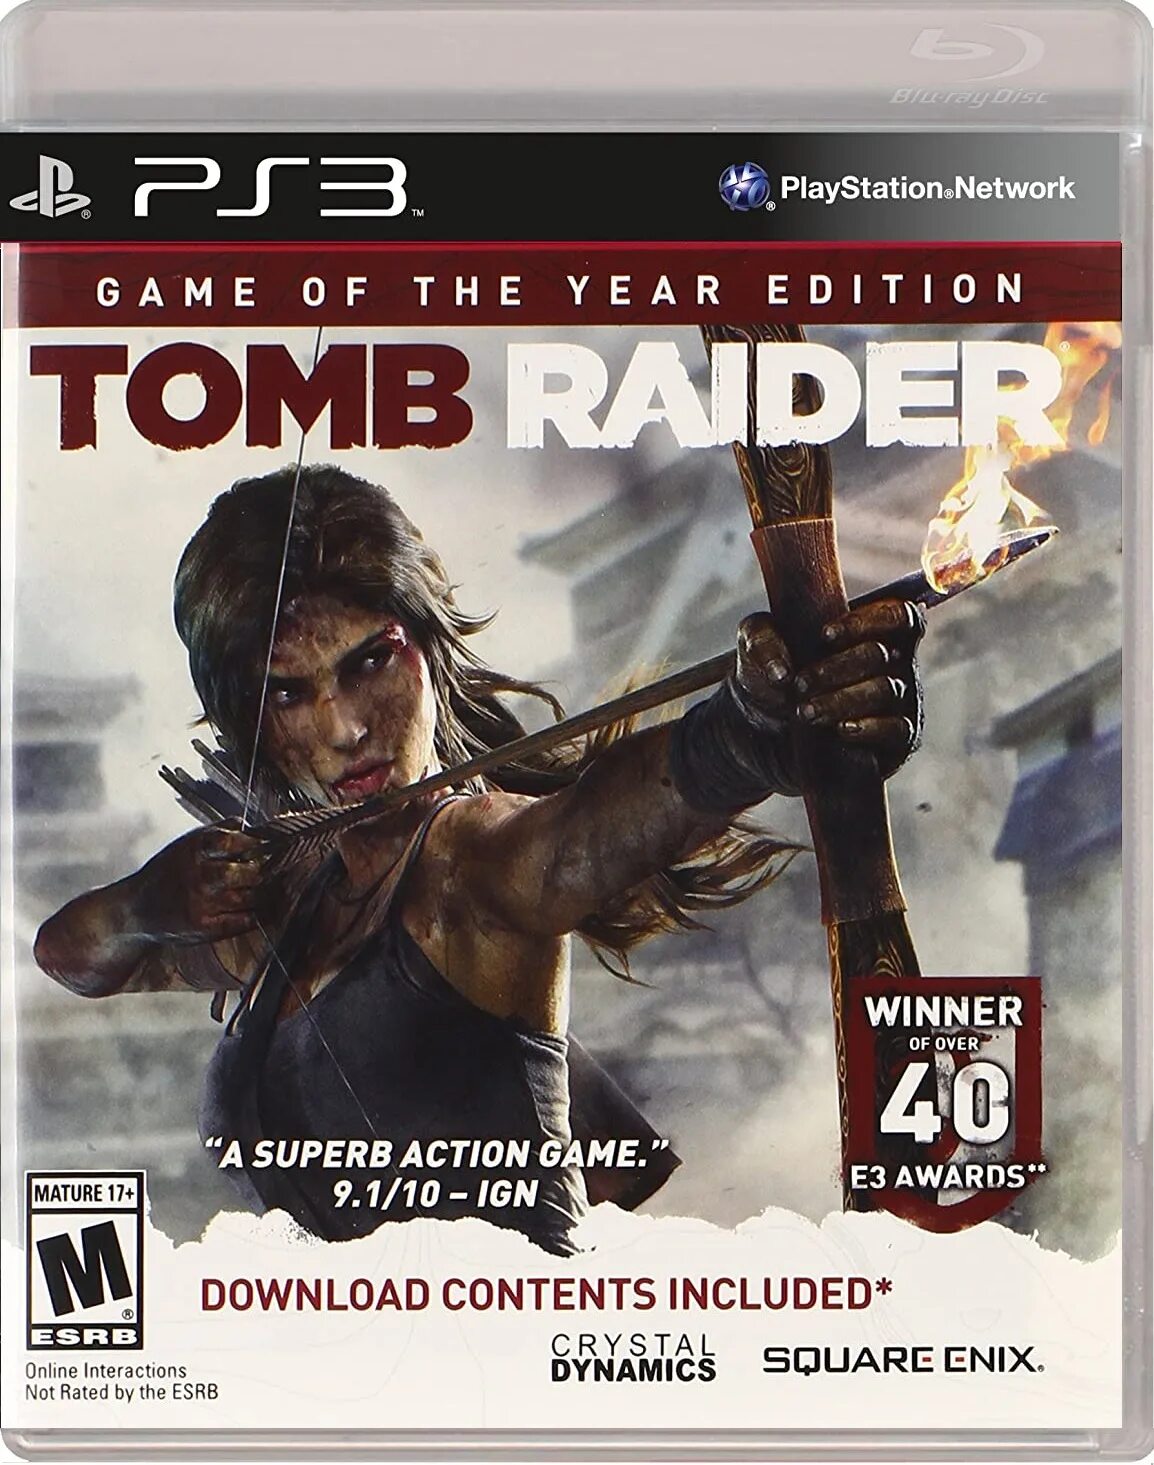 Томб Райдер сони плейстейшен 4. Tomb Raider Digital Edition ps3. Том Райдер на пс3 Crystal. Том Райдер сони плейстейшен. Game of the year игры